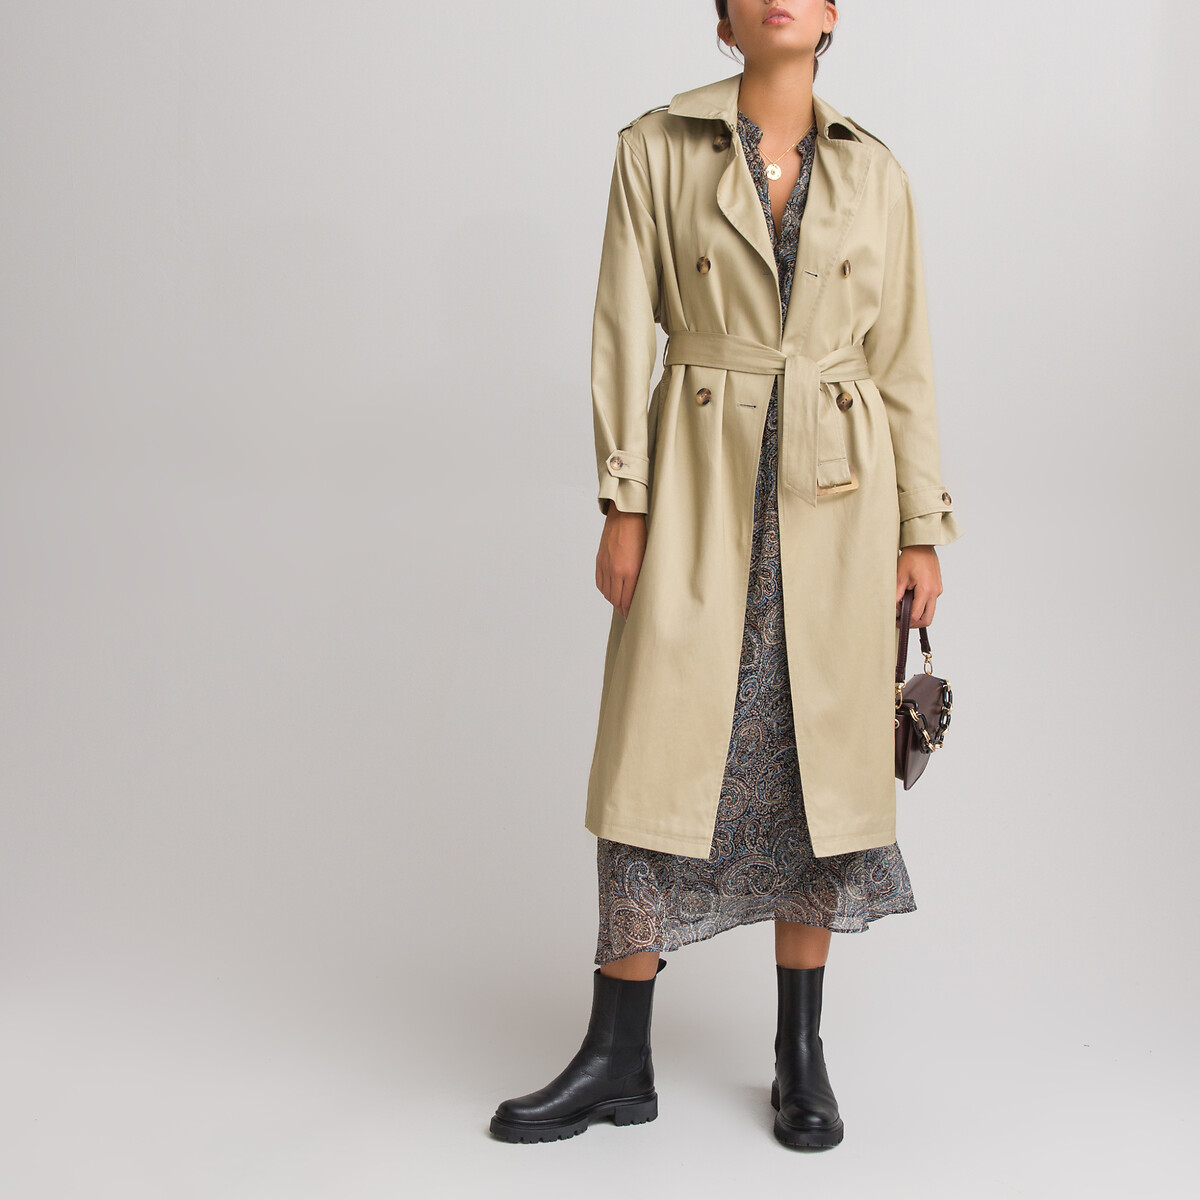 Gray L NoName Trench coat discount 92% WOMEN FASHION Coats Trench coat Casual 